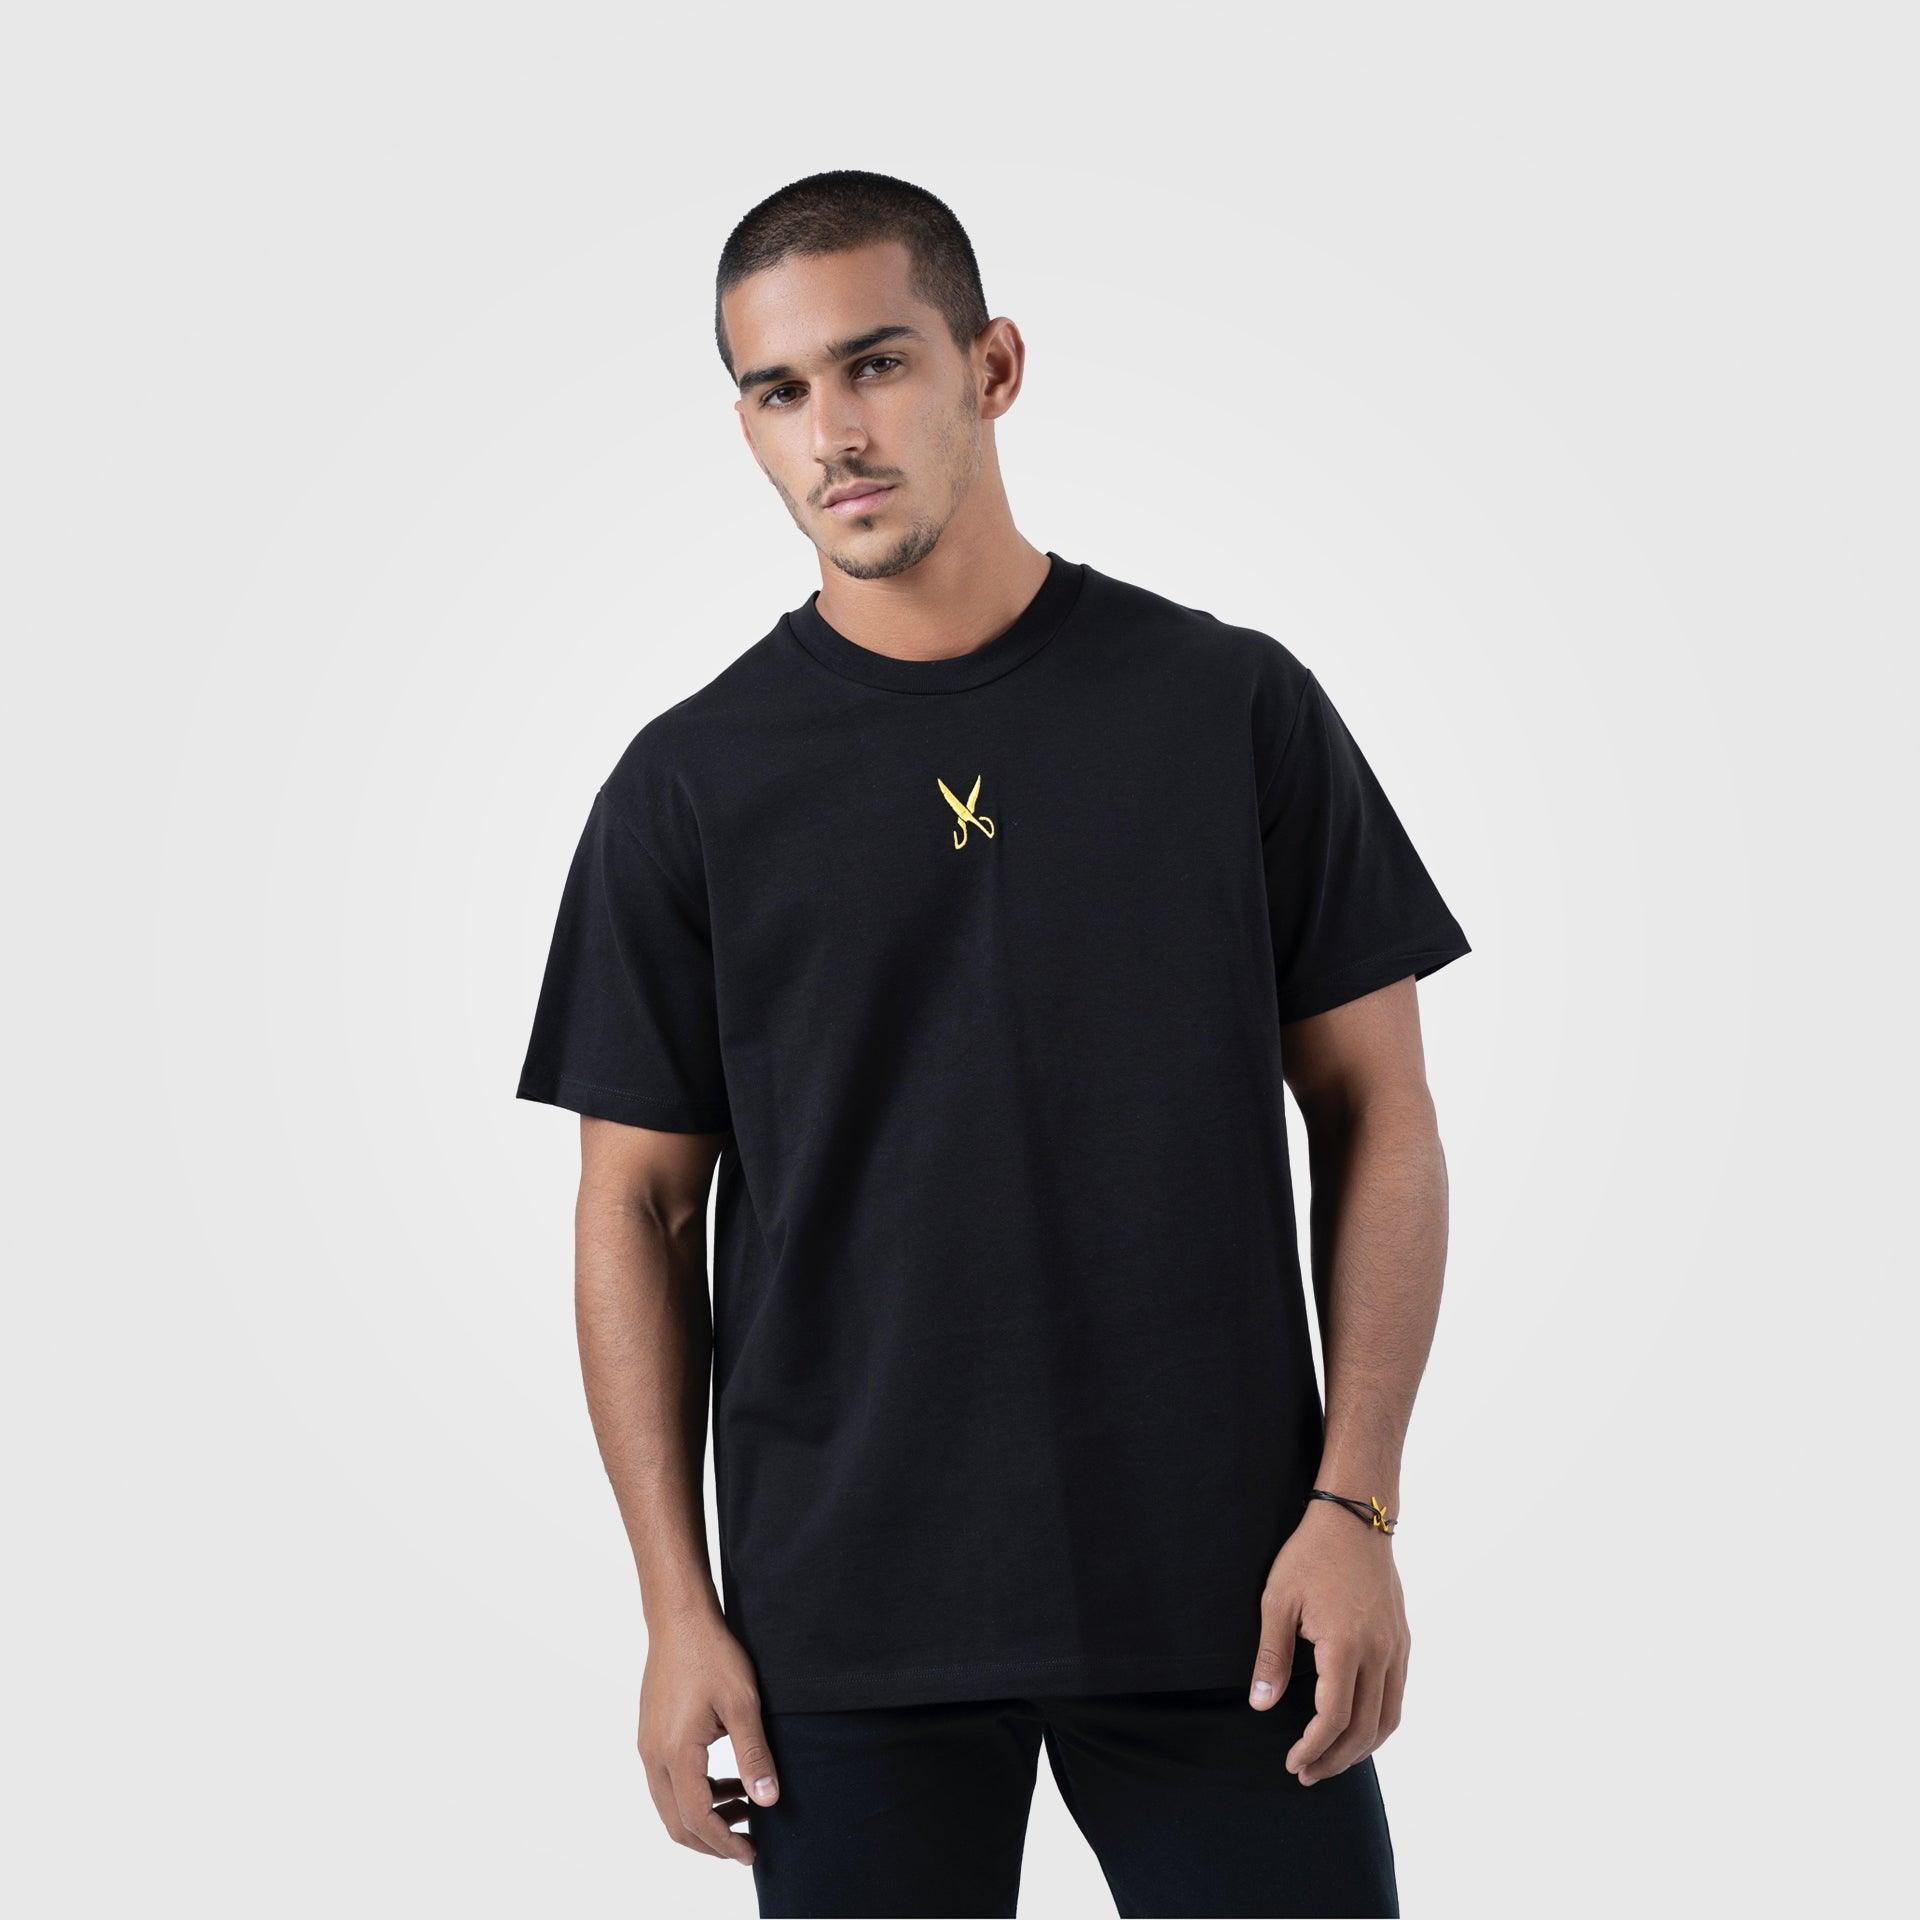 Black Regions T-shirt From Weaver Design - WECRE8